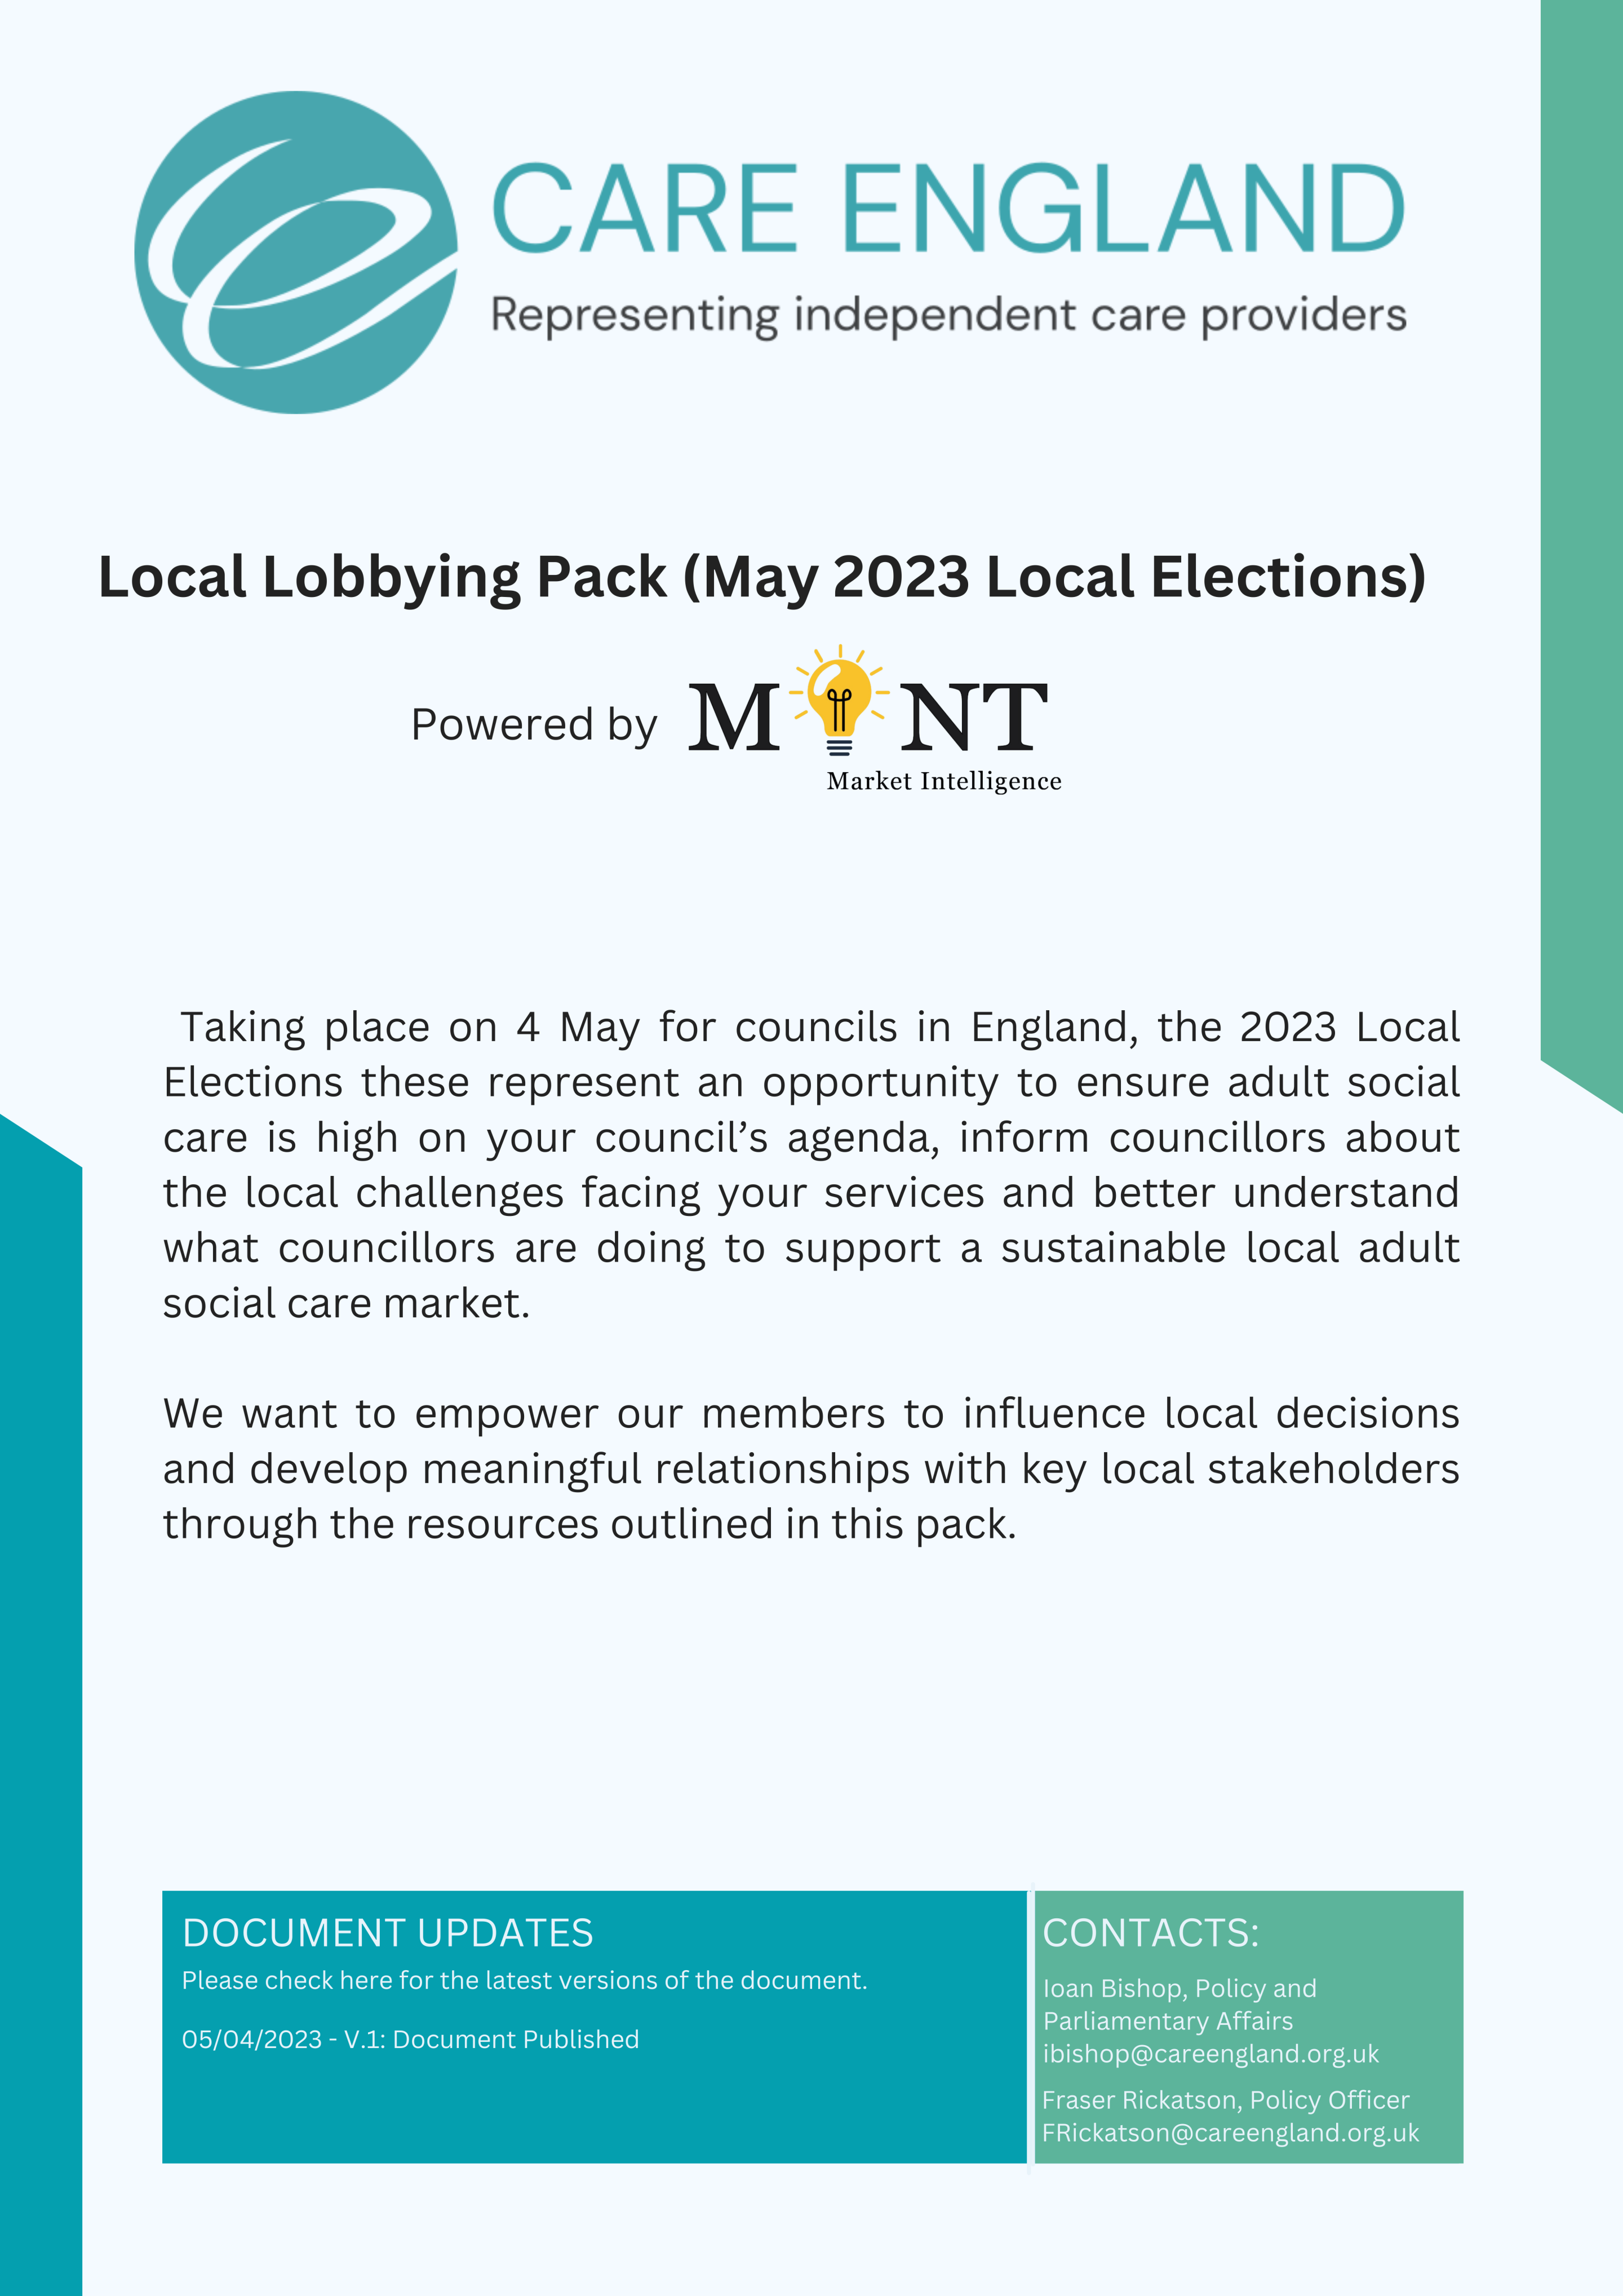 Local Lobbying Pack Image